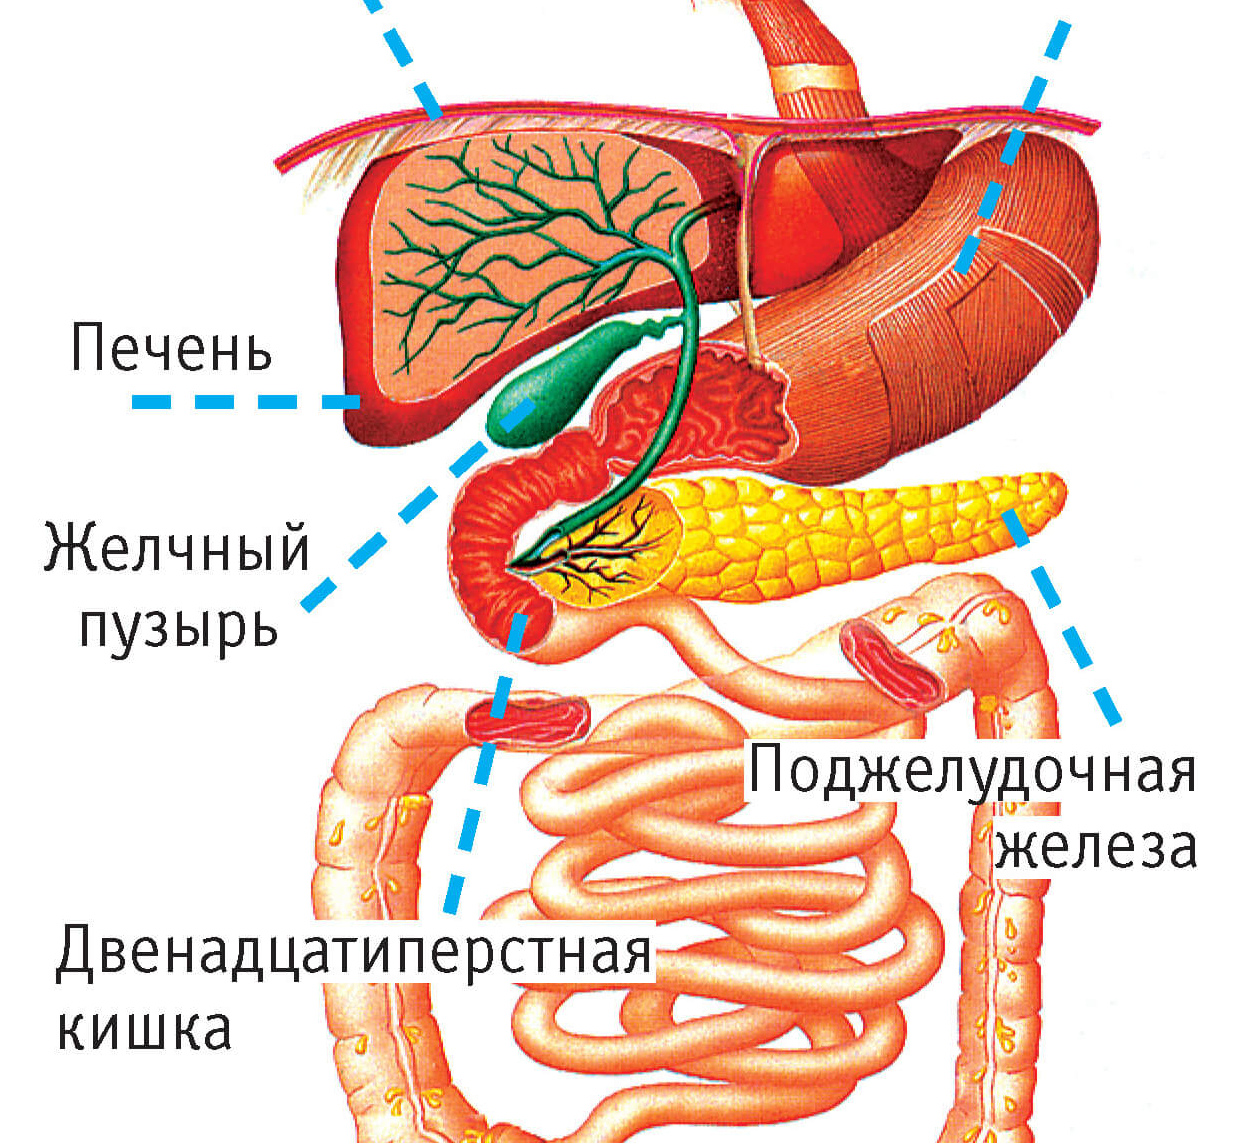 Желудка поджелудочной железы желчного пузыря. Строение человека желудок желчный пузырь. Анатомия печень желчный пузырь желудок. Анатомия желудок печень поджелудочная железа. Печень желчный пузырь поджелудочная.